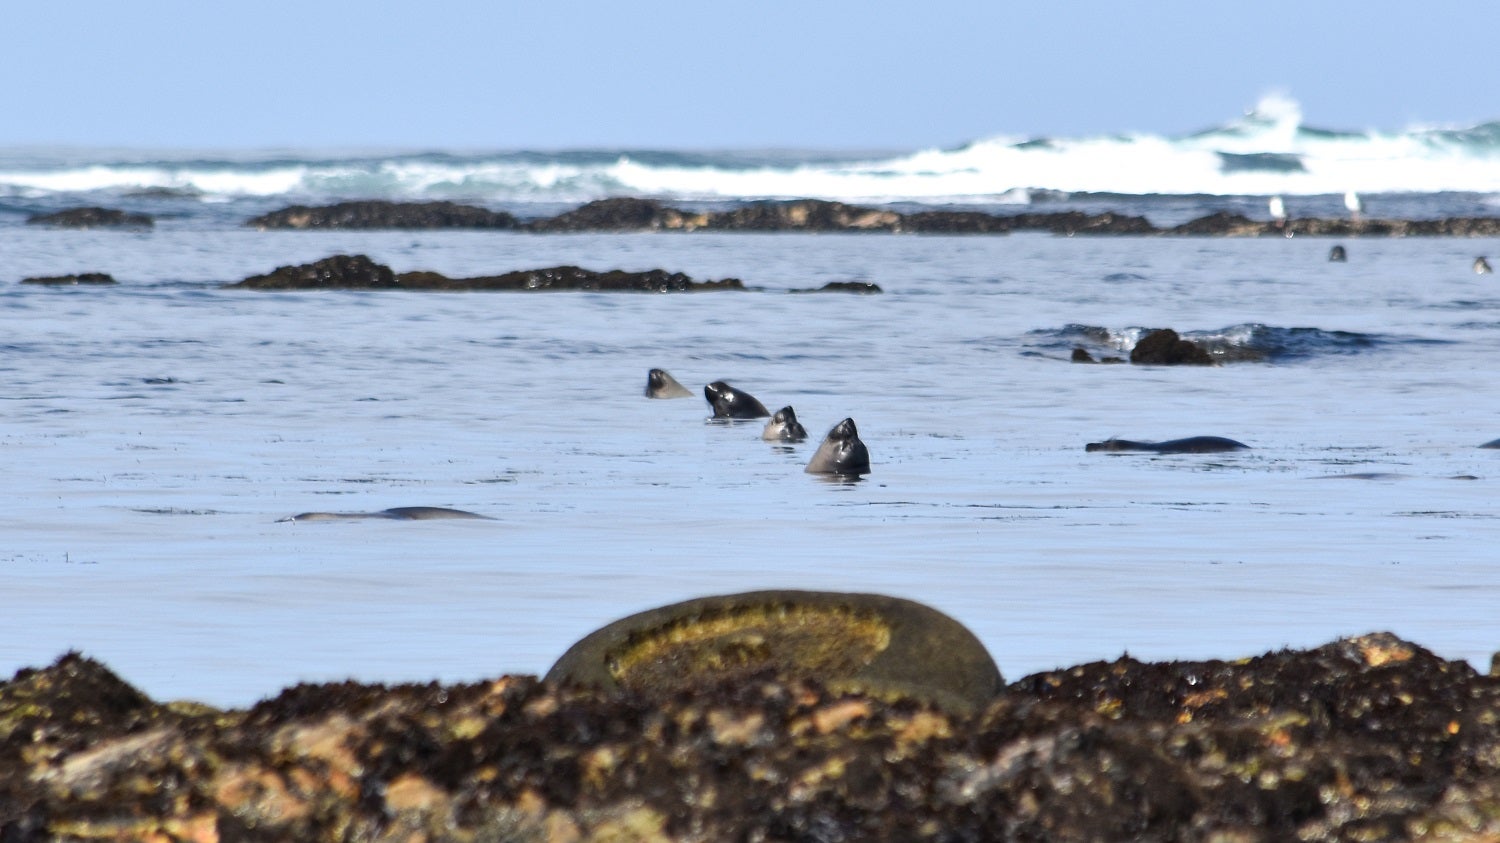 Elephant seals sleeping in the ocean shallows